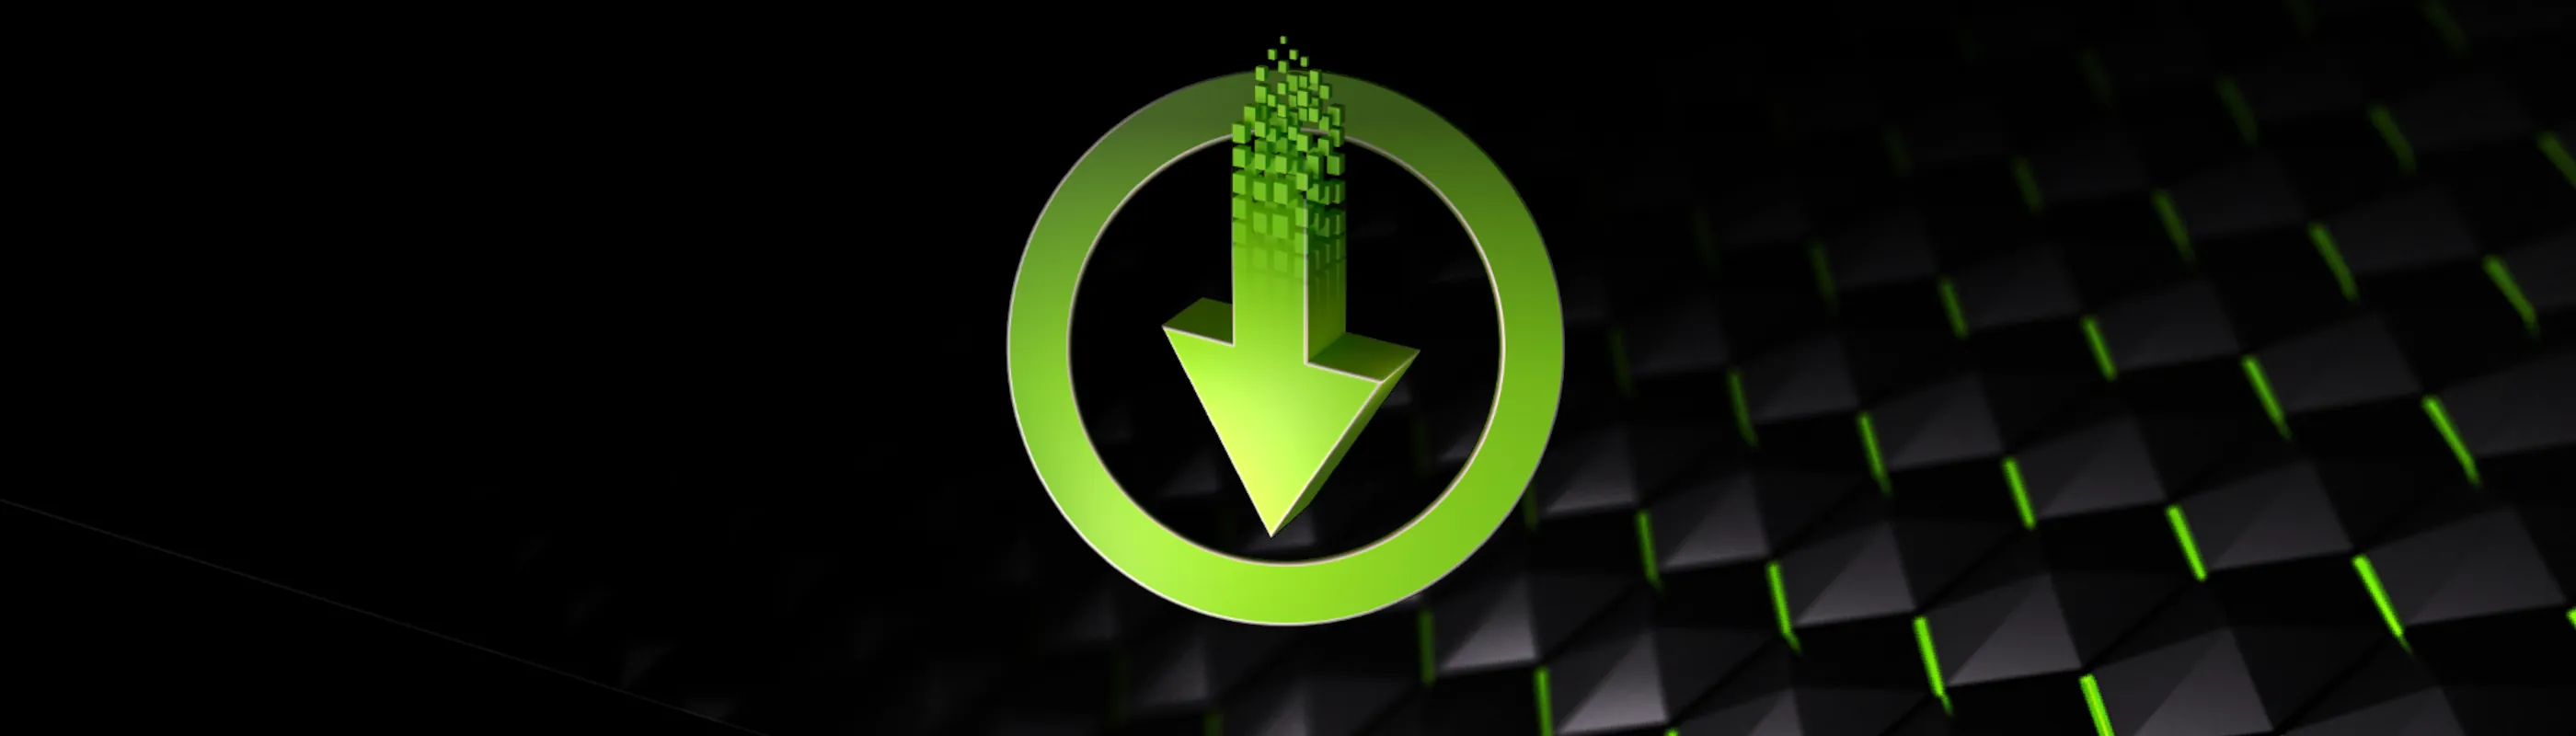 Nvidia Geforce Driver Logo